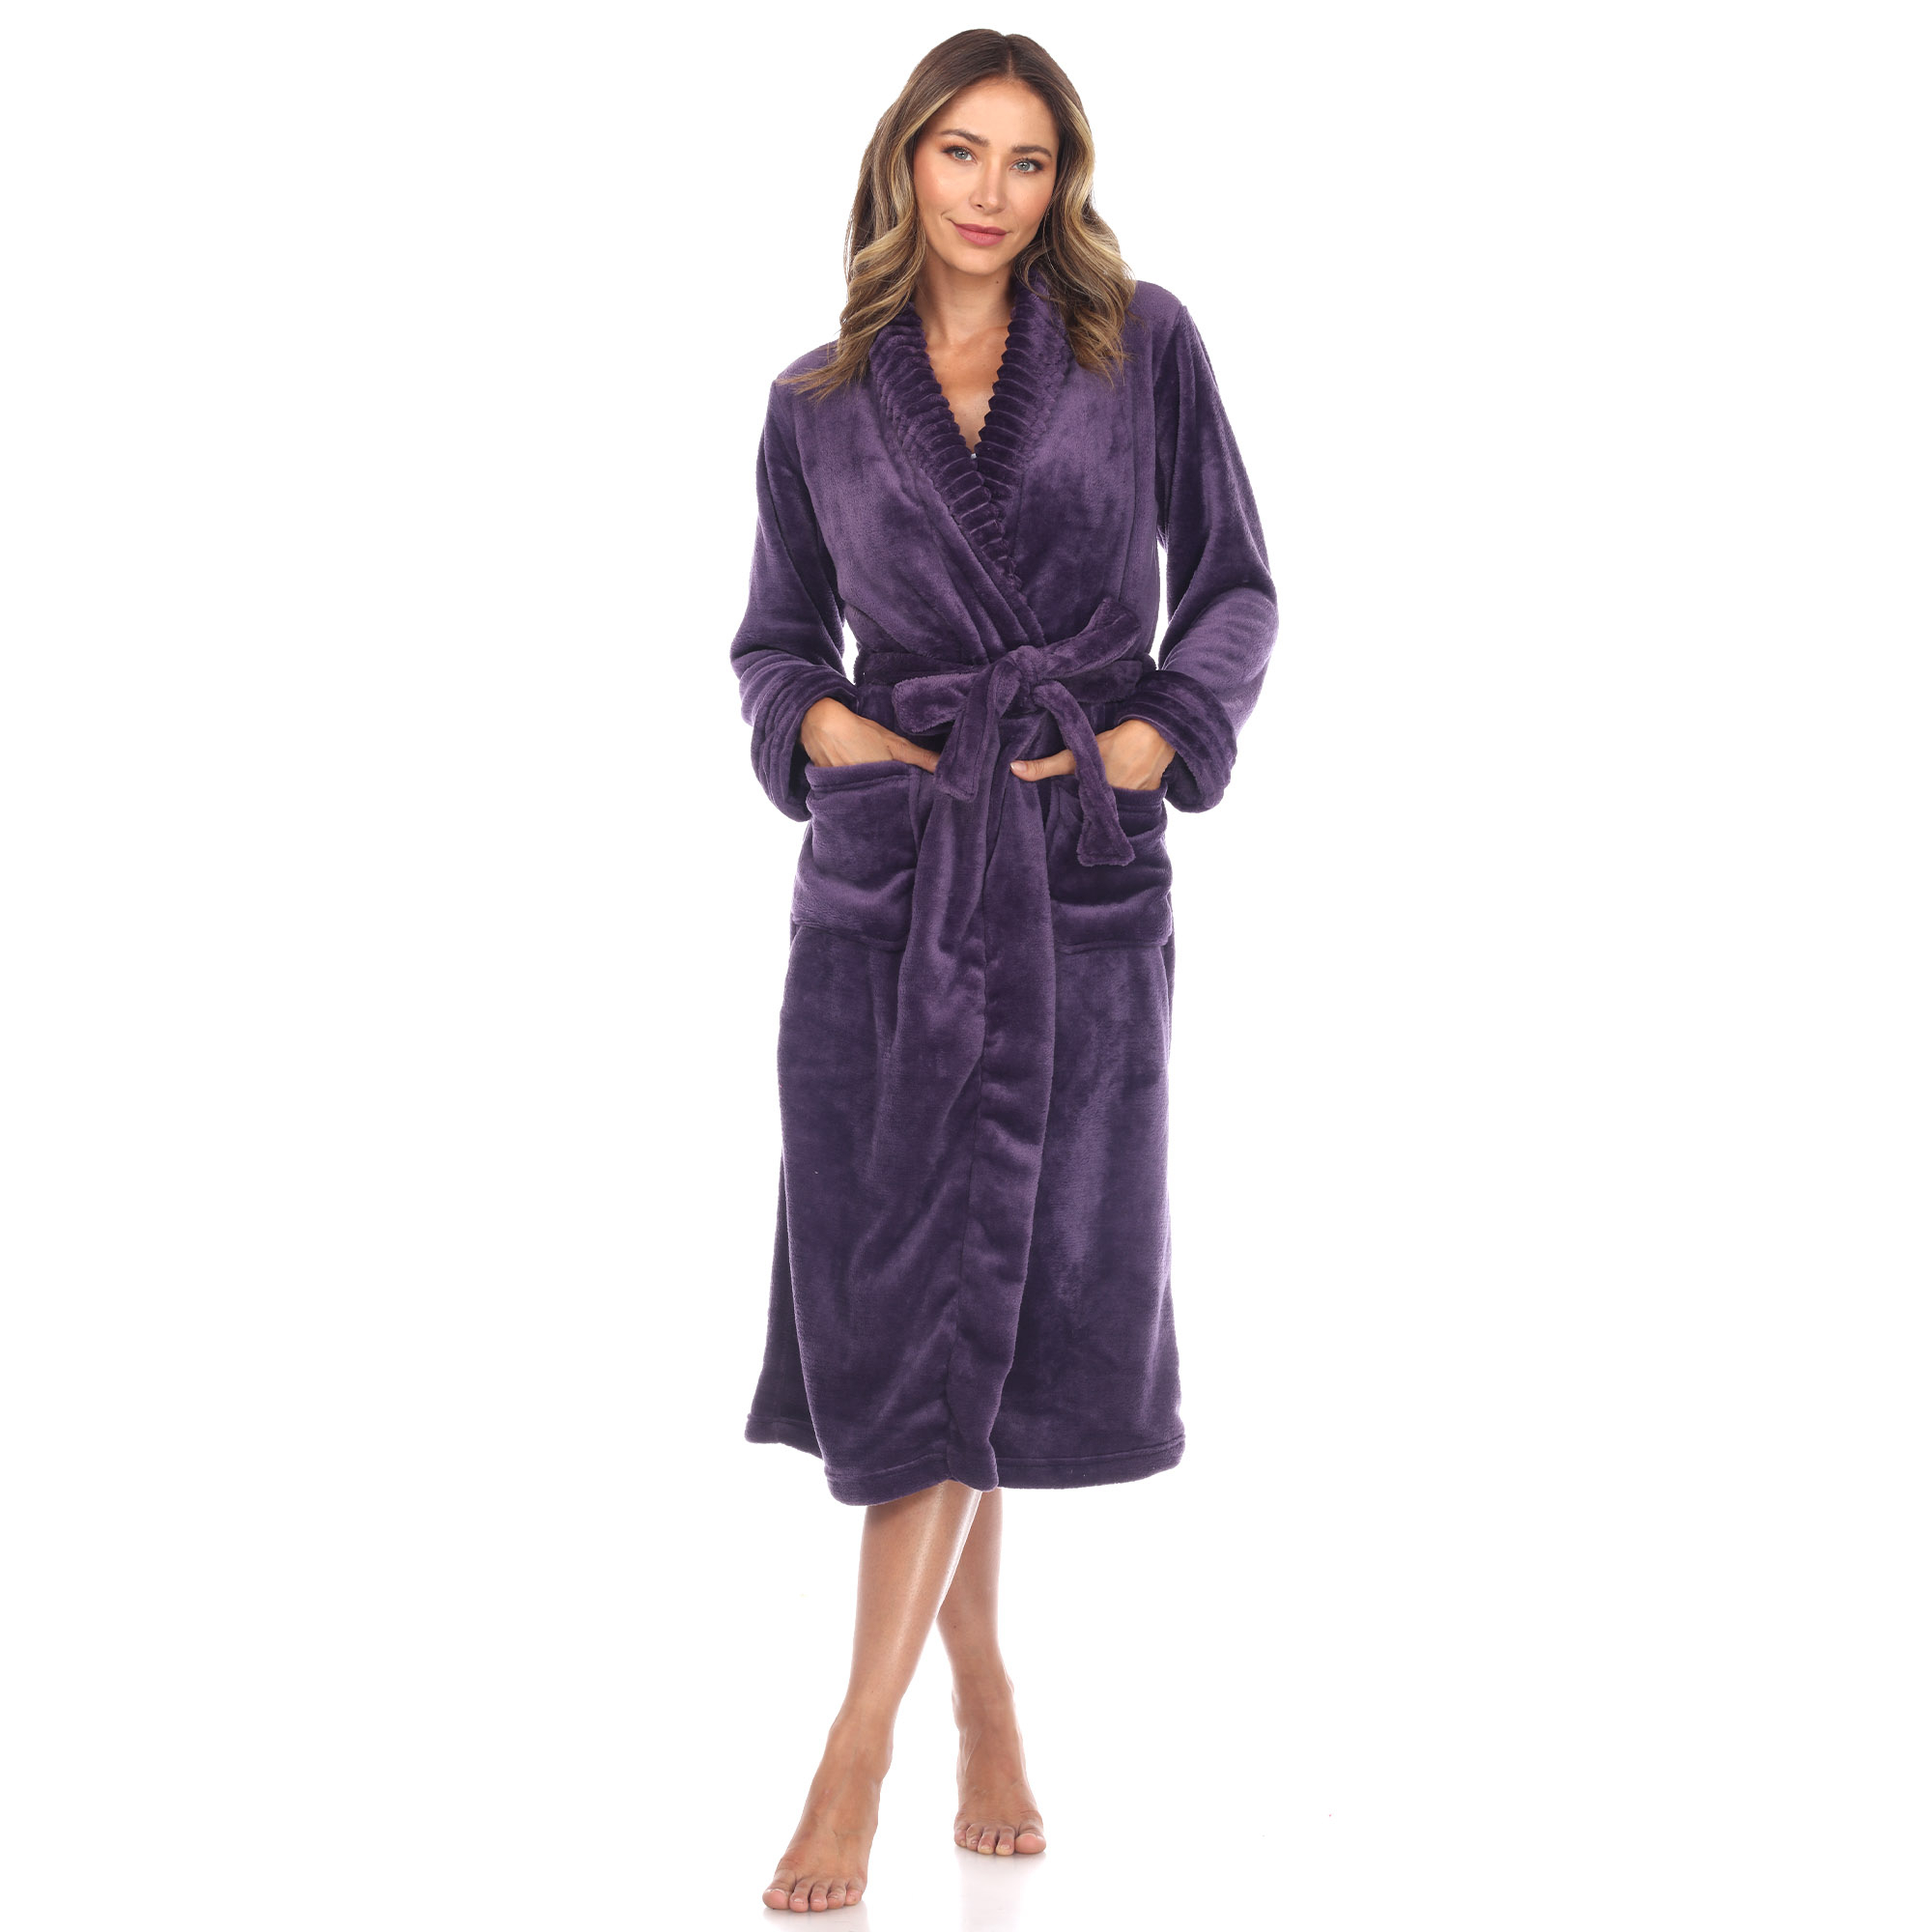 White Mark Women's Cozy Lounge Robe - Purple, S/M